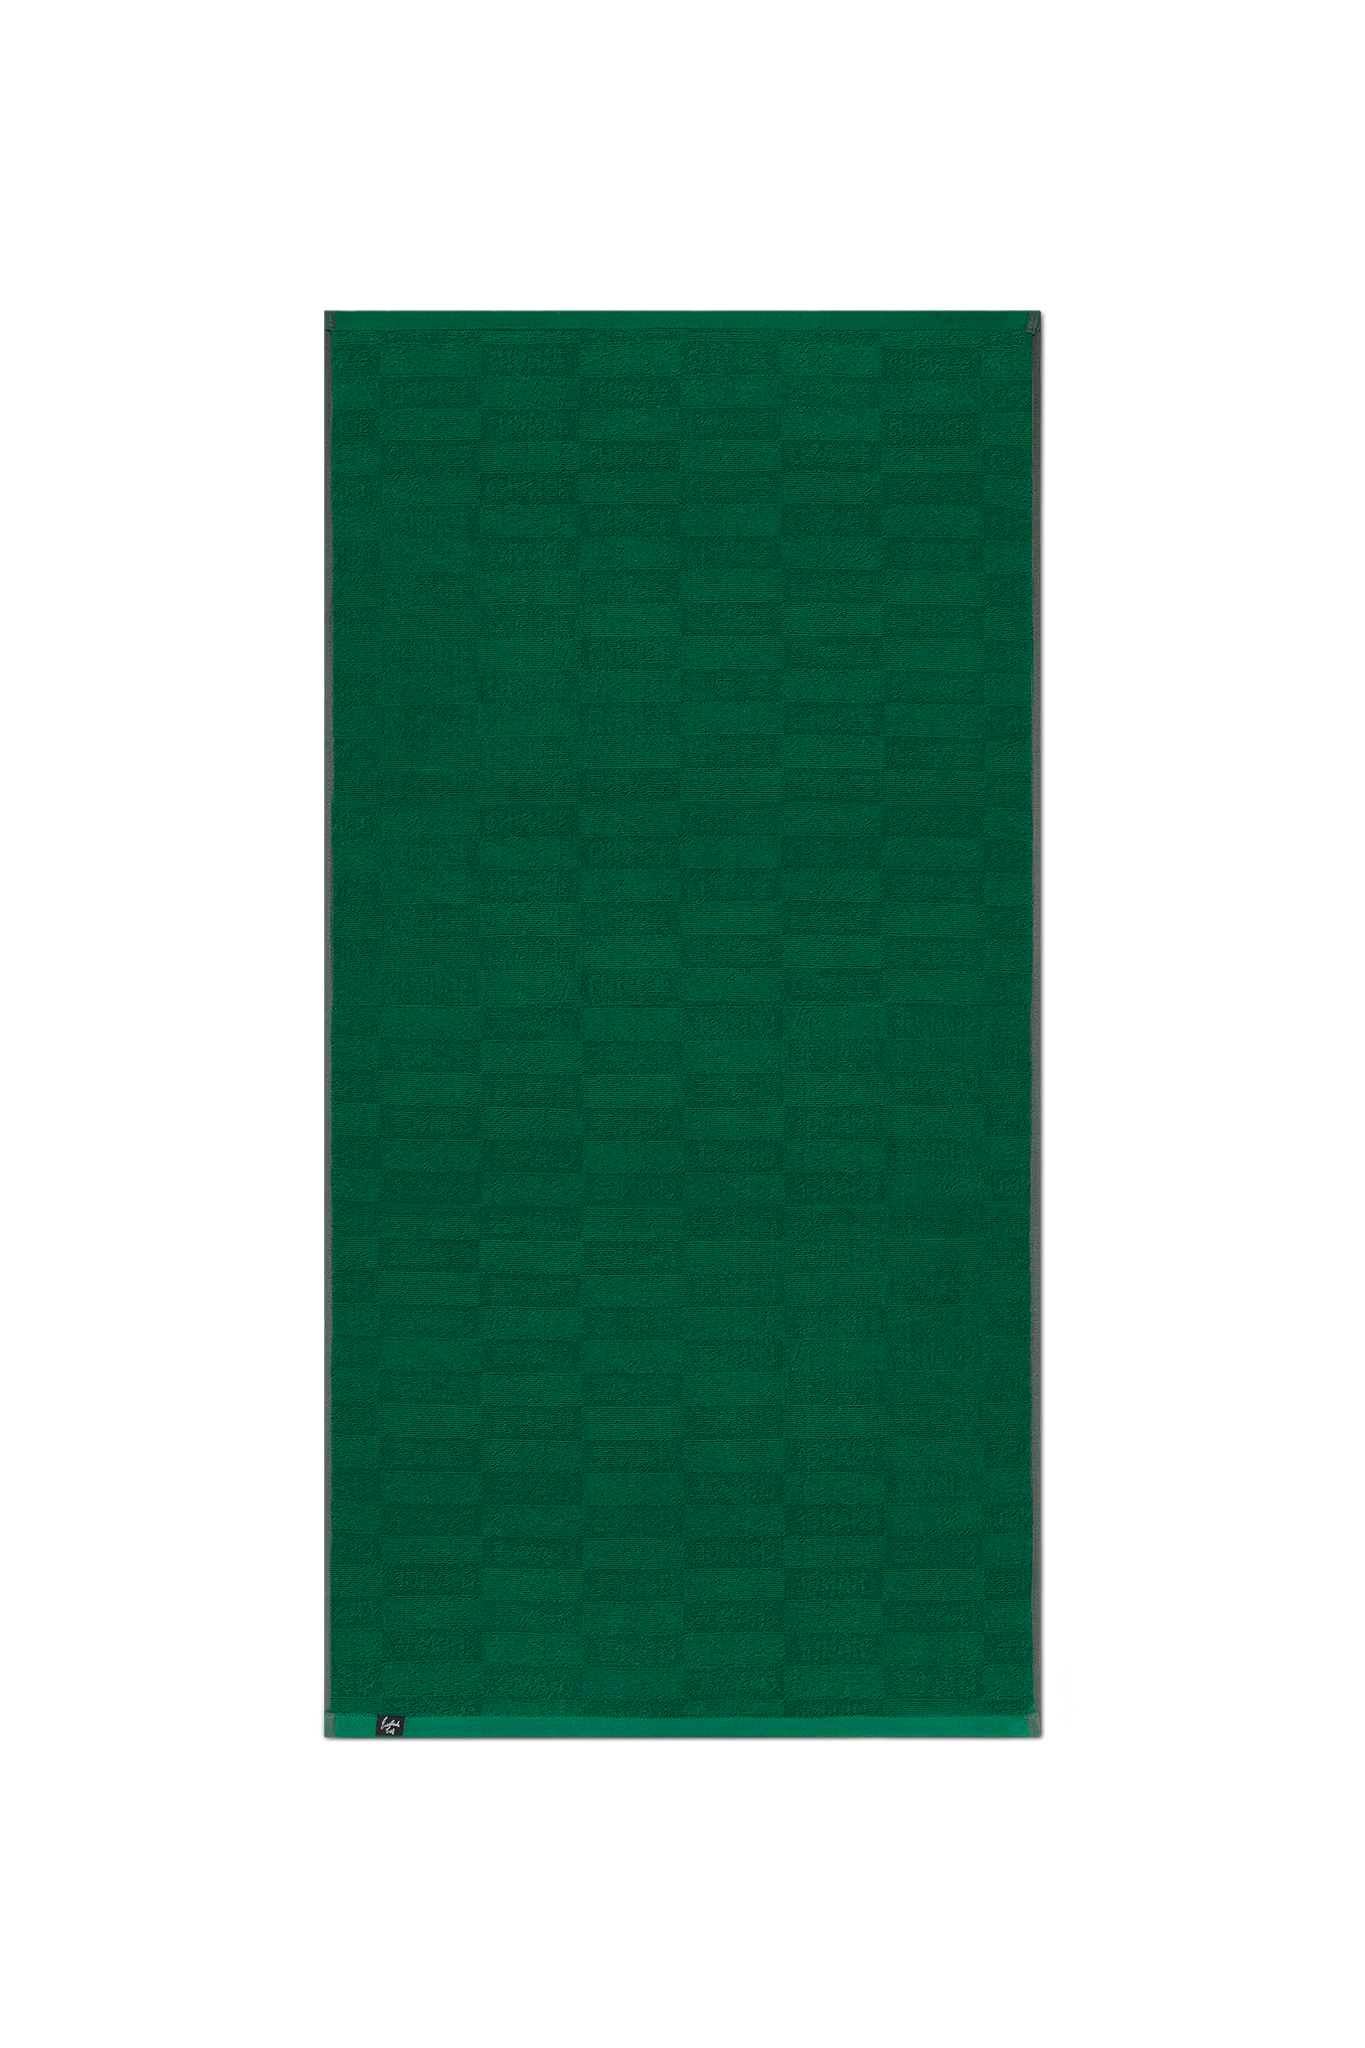 Eastside Golf 1961 Change Towel Green